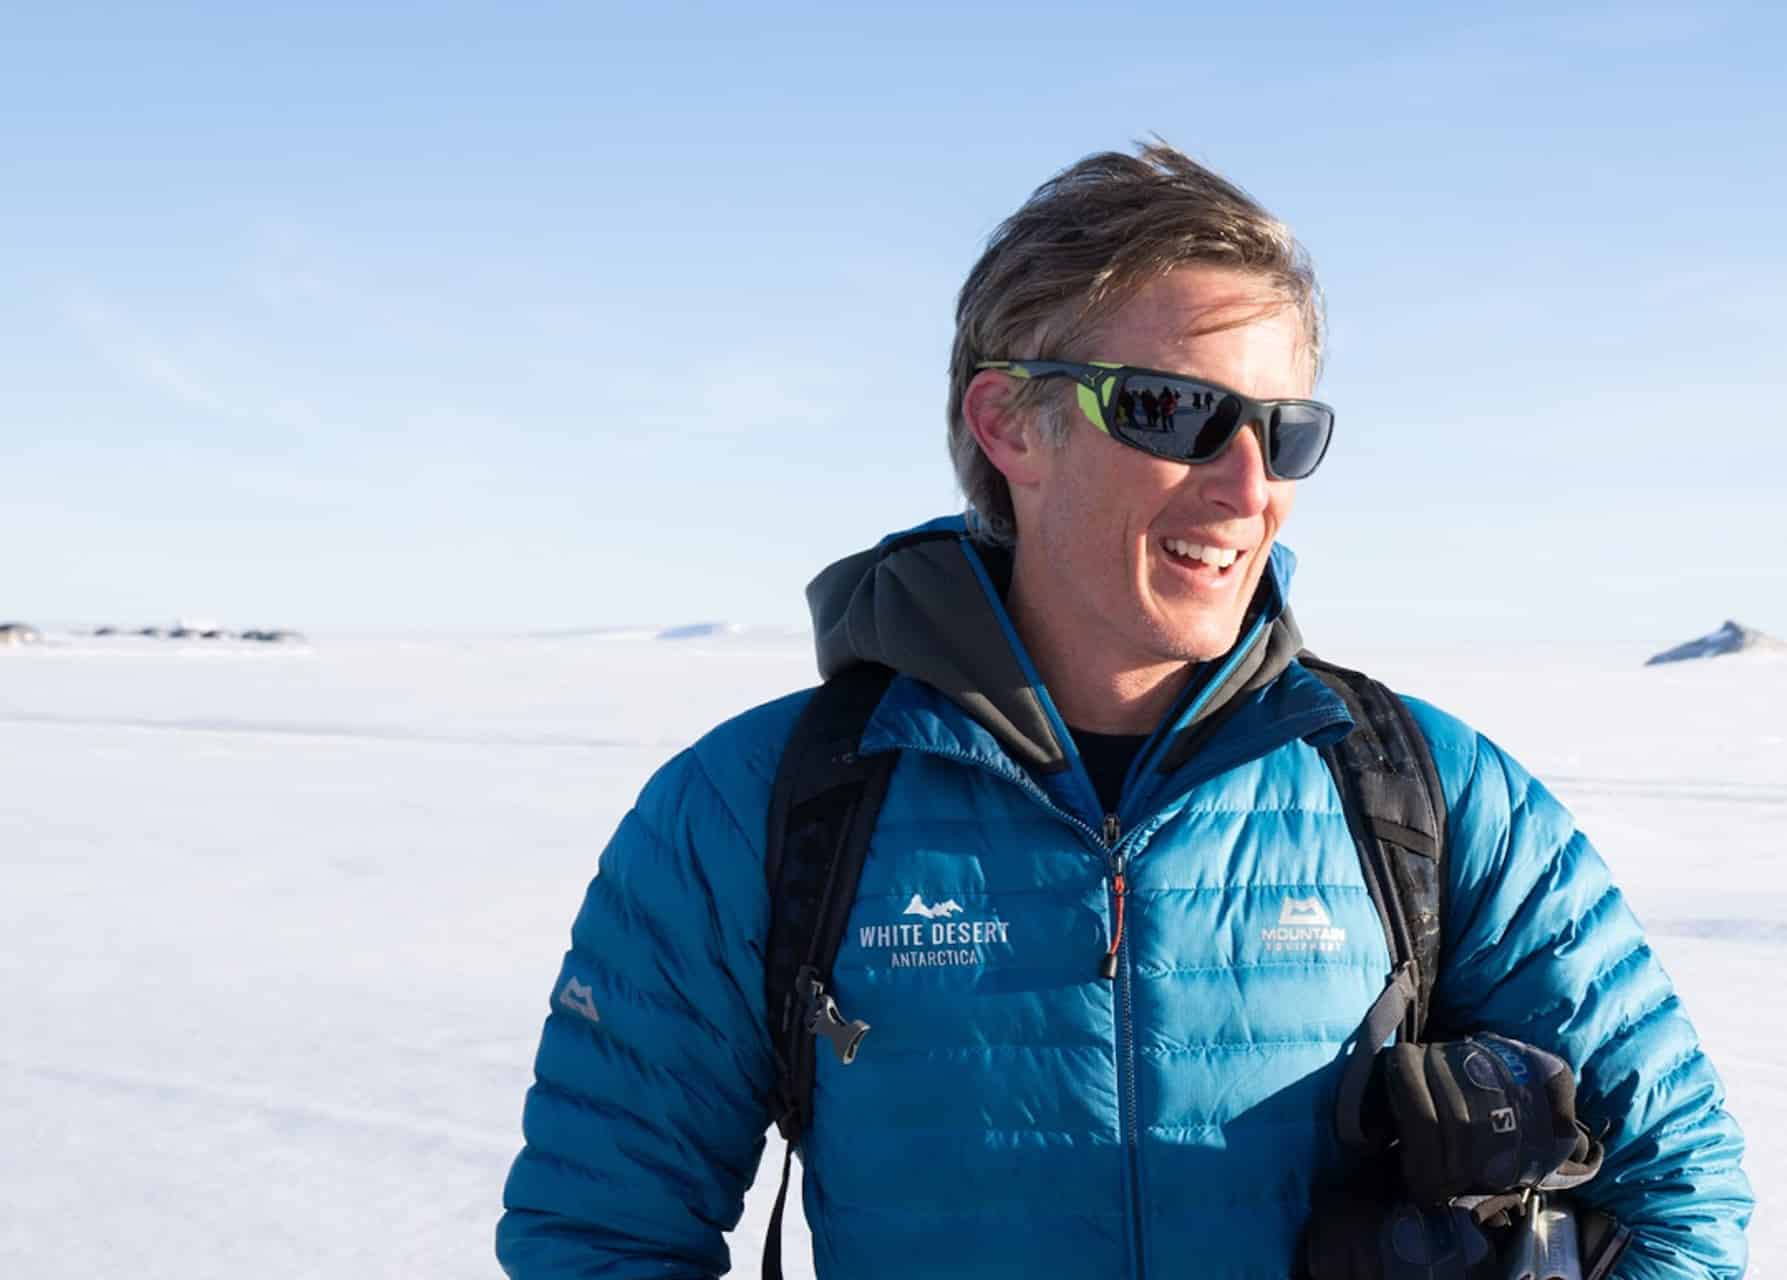 Polar explorer and CEO of White Desert Antarctica, Patrick Woodhead